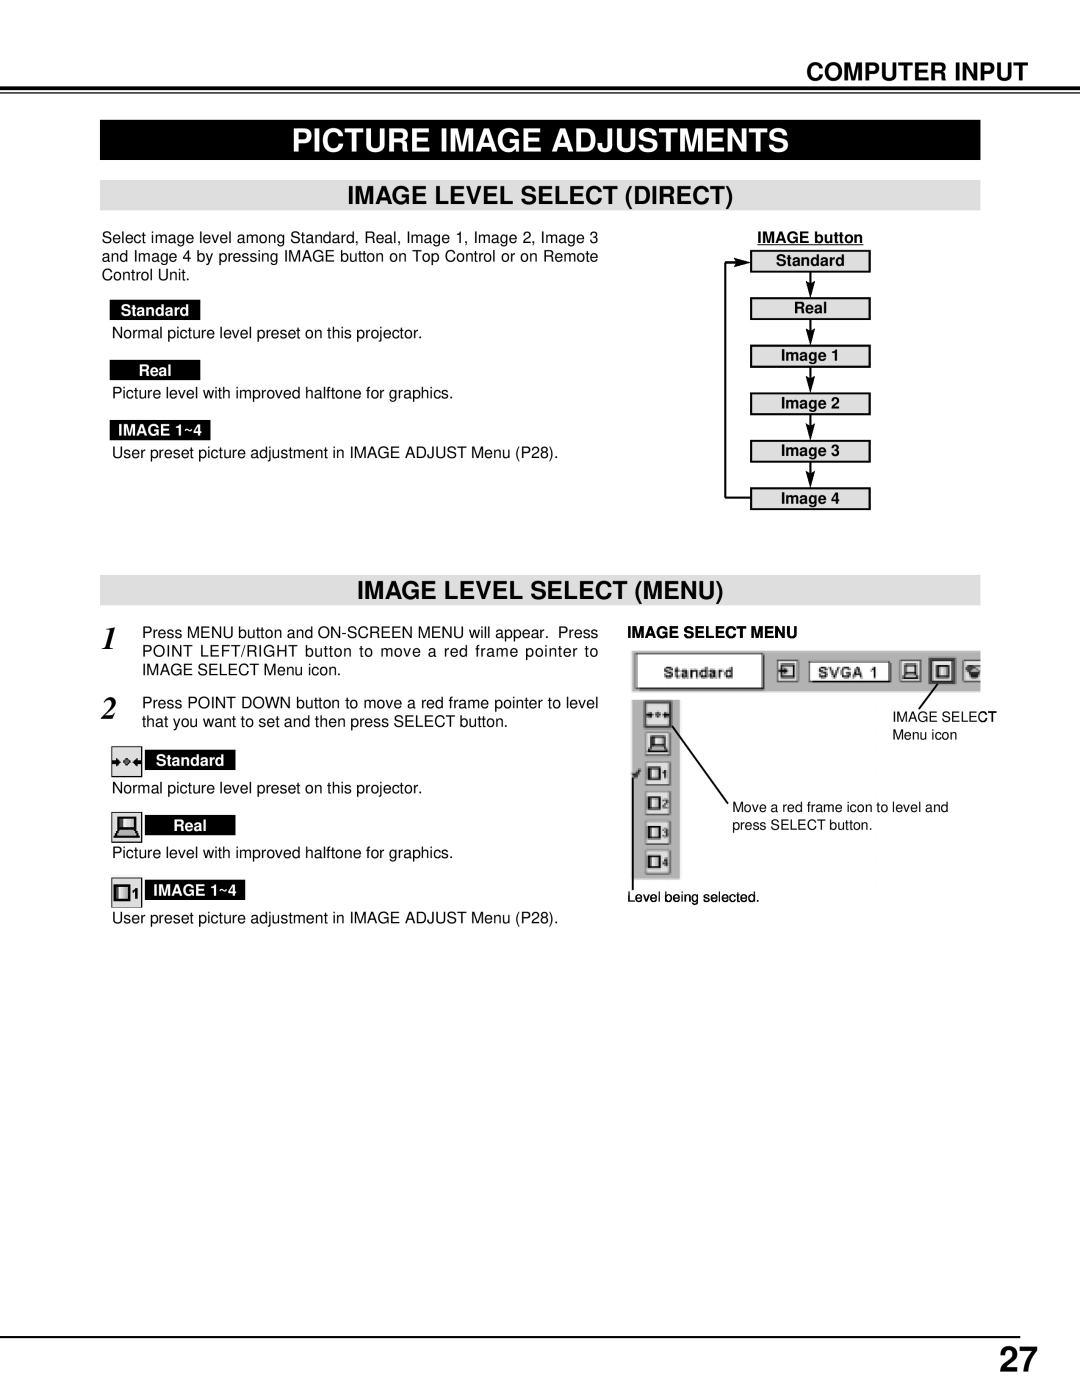 BOXLIGHT MP-42T manual Picture Image Adjustments, Image Level Select Direct, Image Level Select Menu, Computer Input 